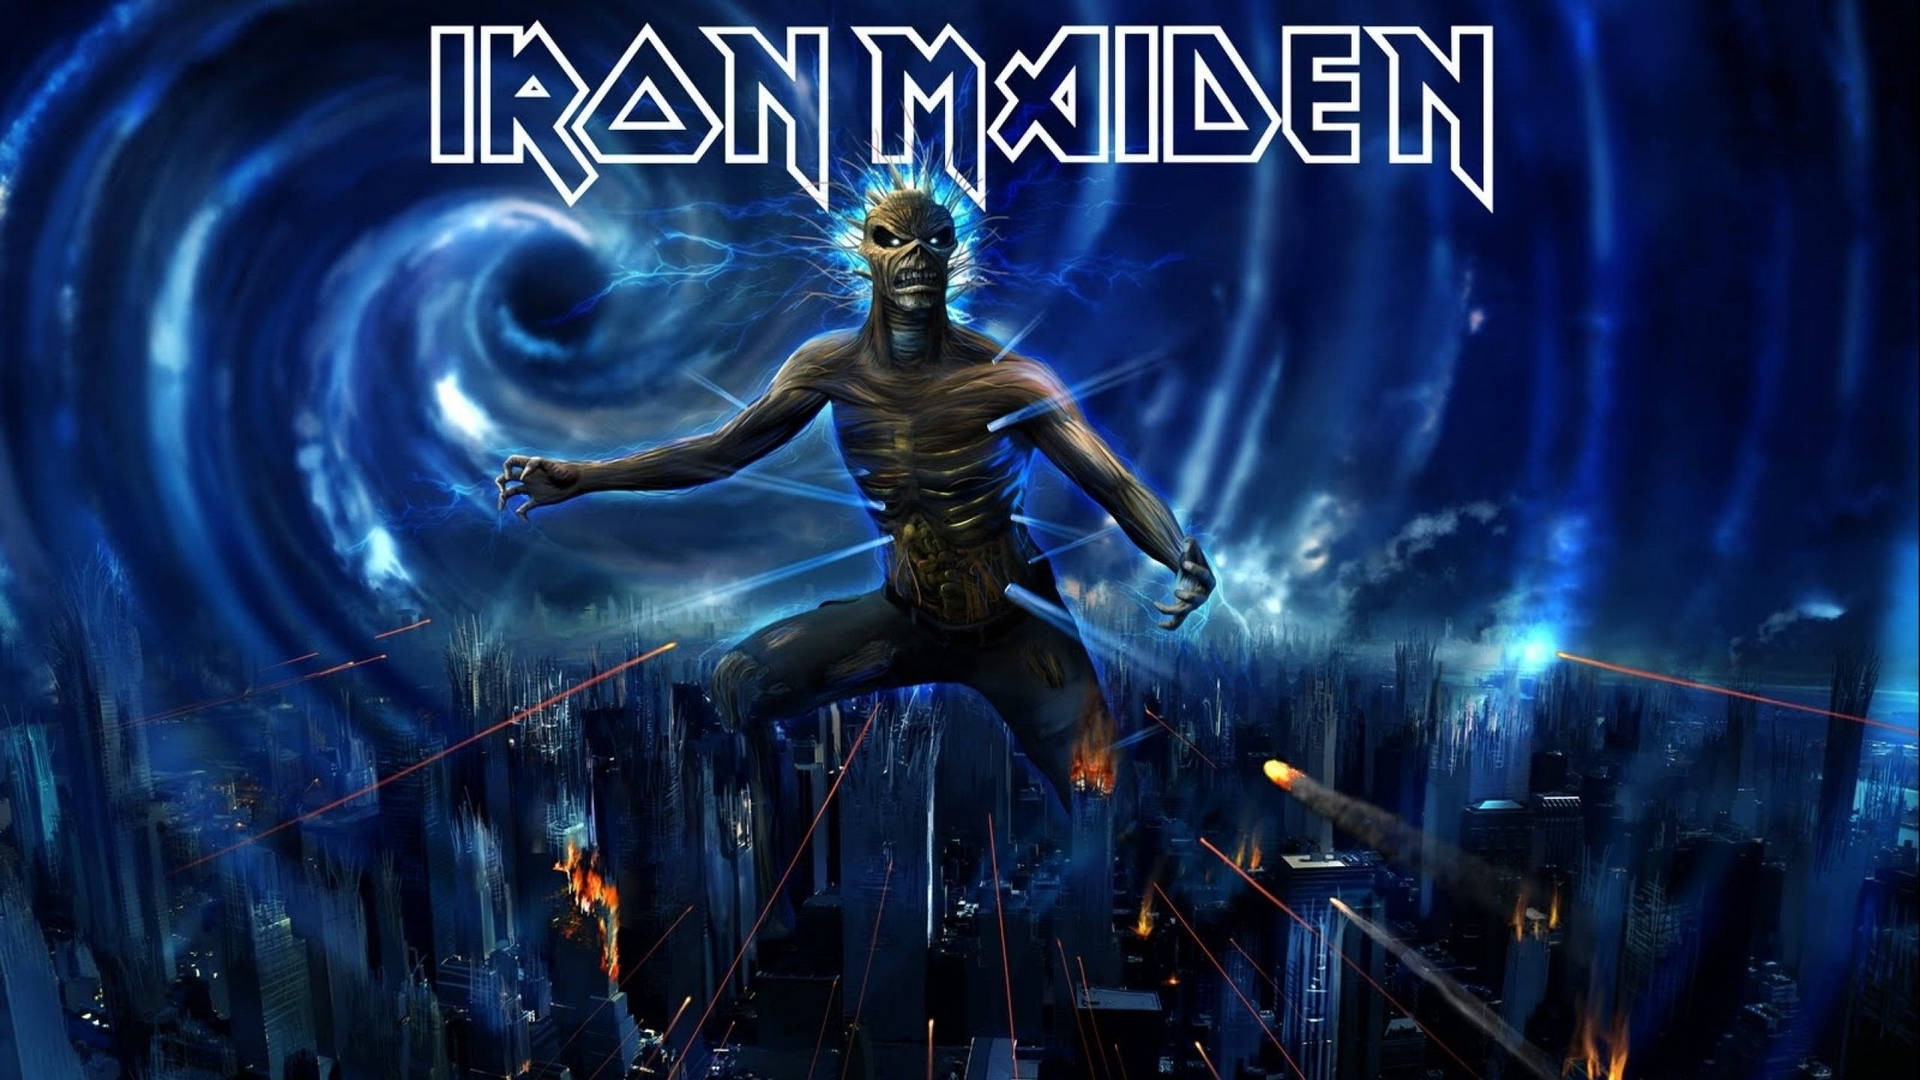 Iron Maiden band mascot Eddie dominates the city skyline. Wallpaper